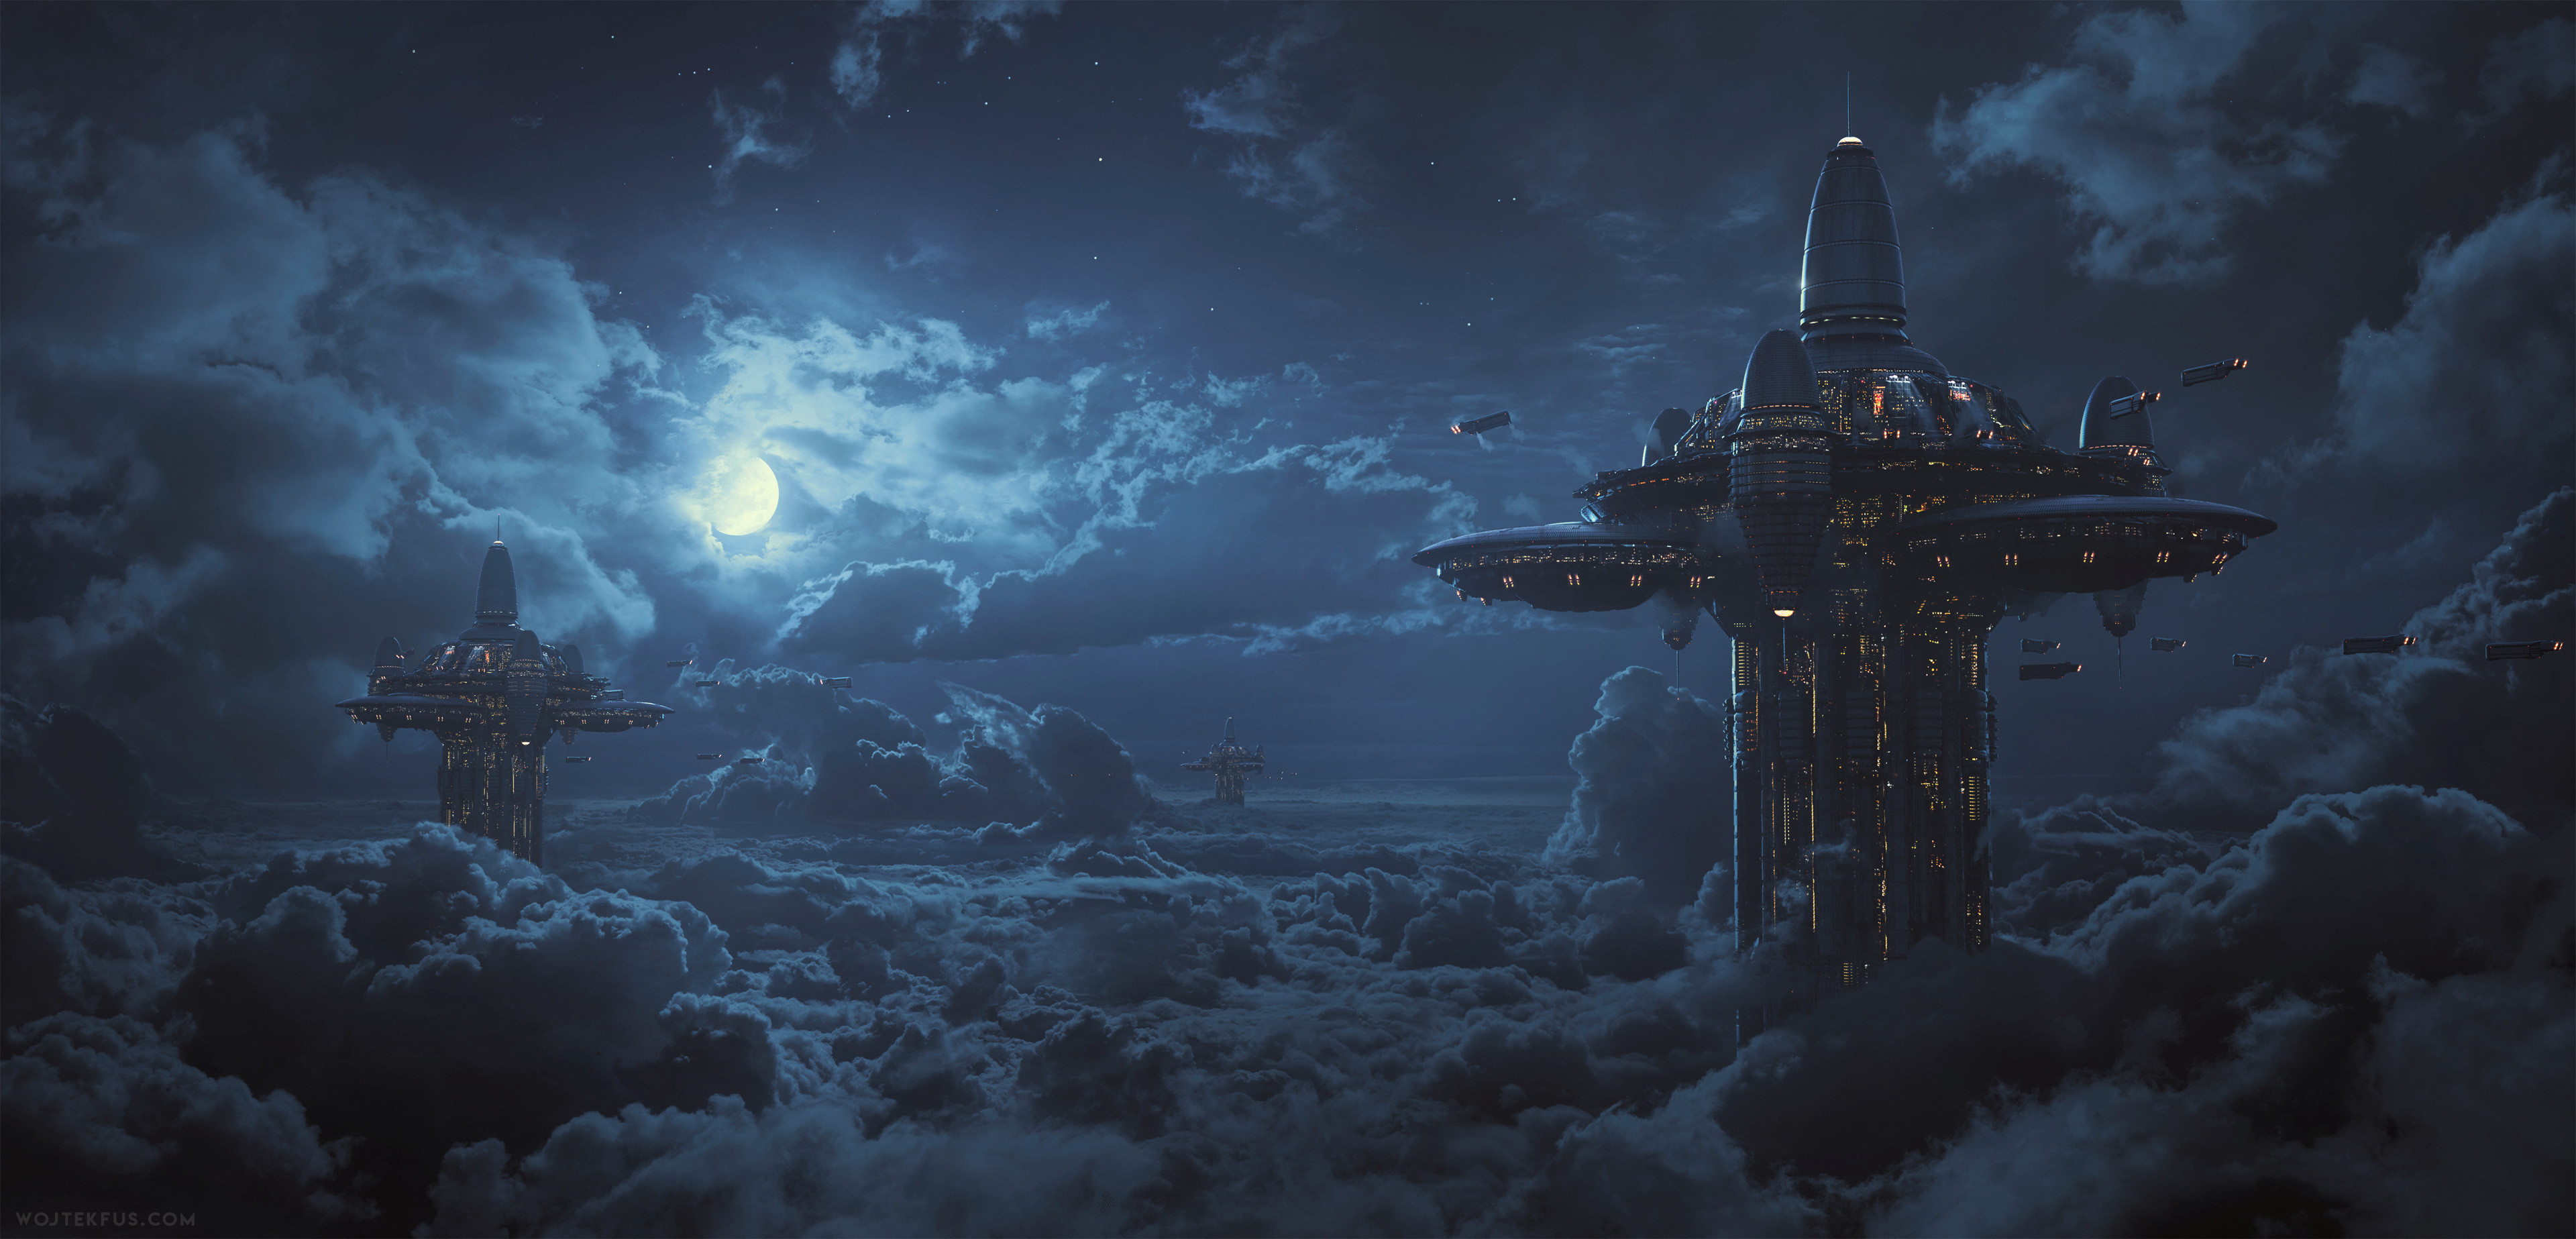 General 3840x1847 Wojtek Fus digital art science fiction moonlight artwork sky